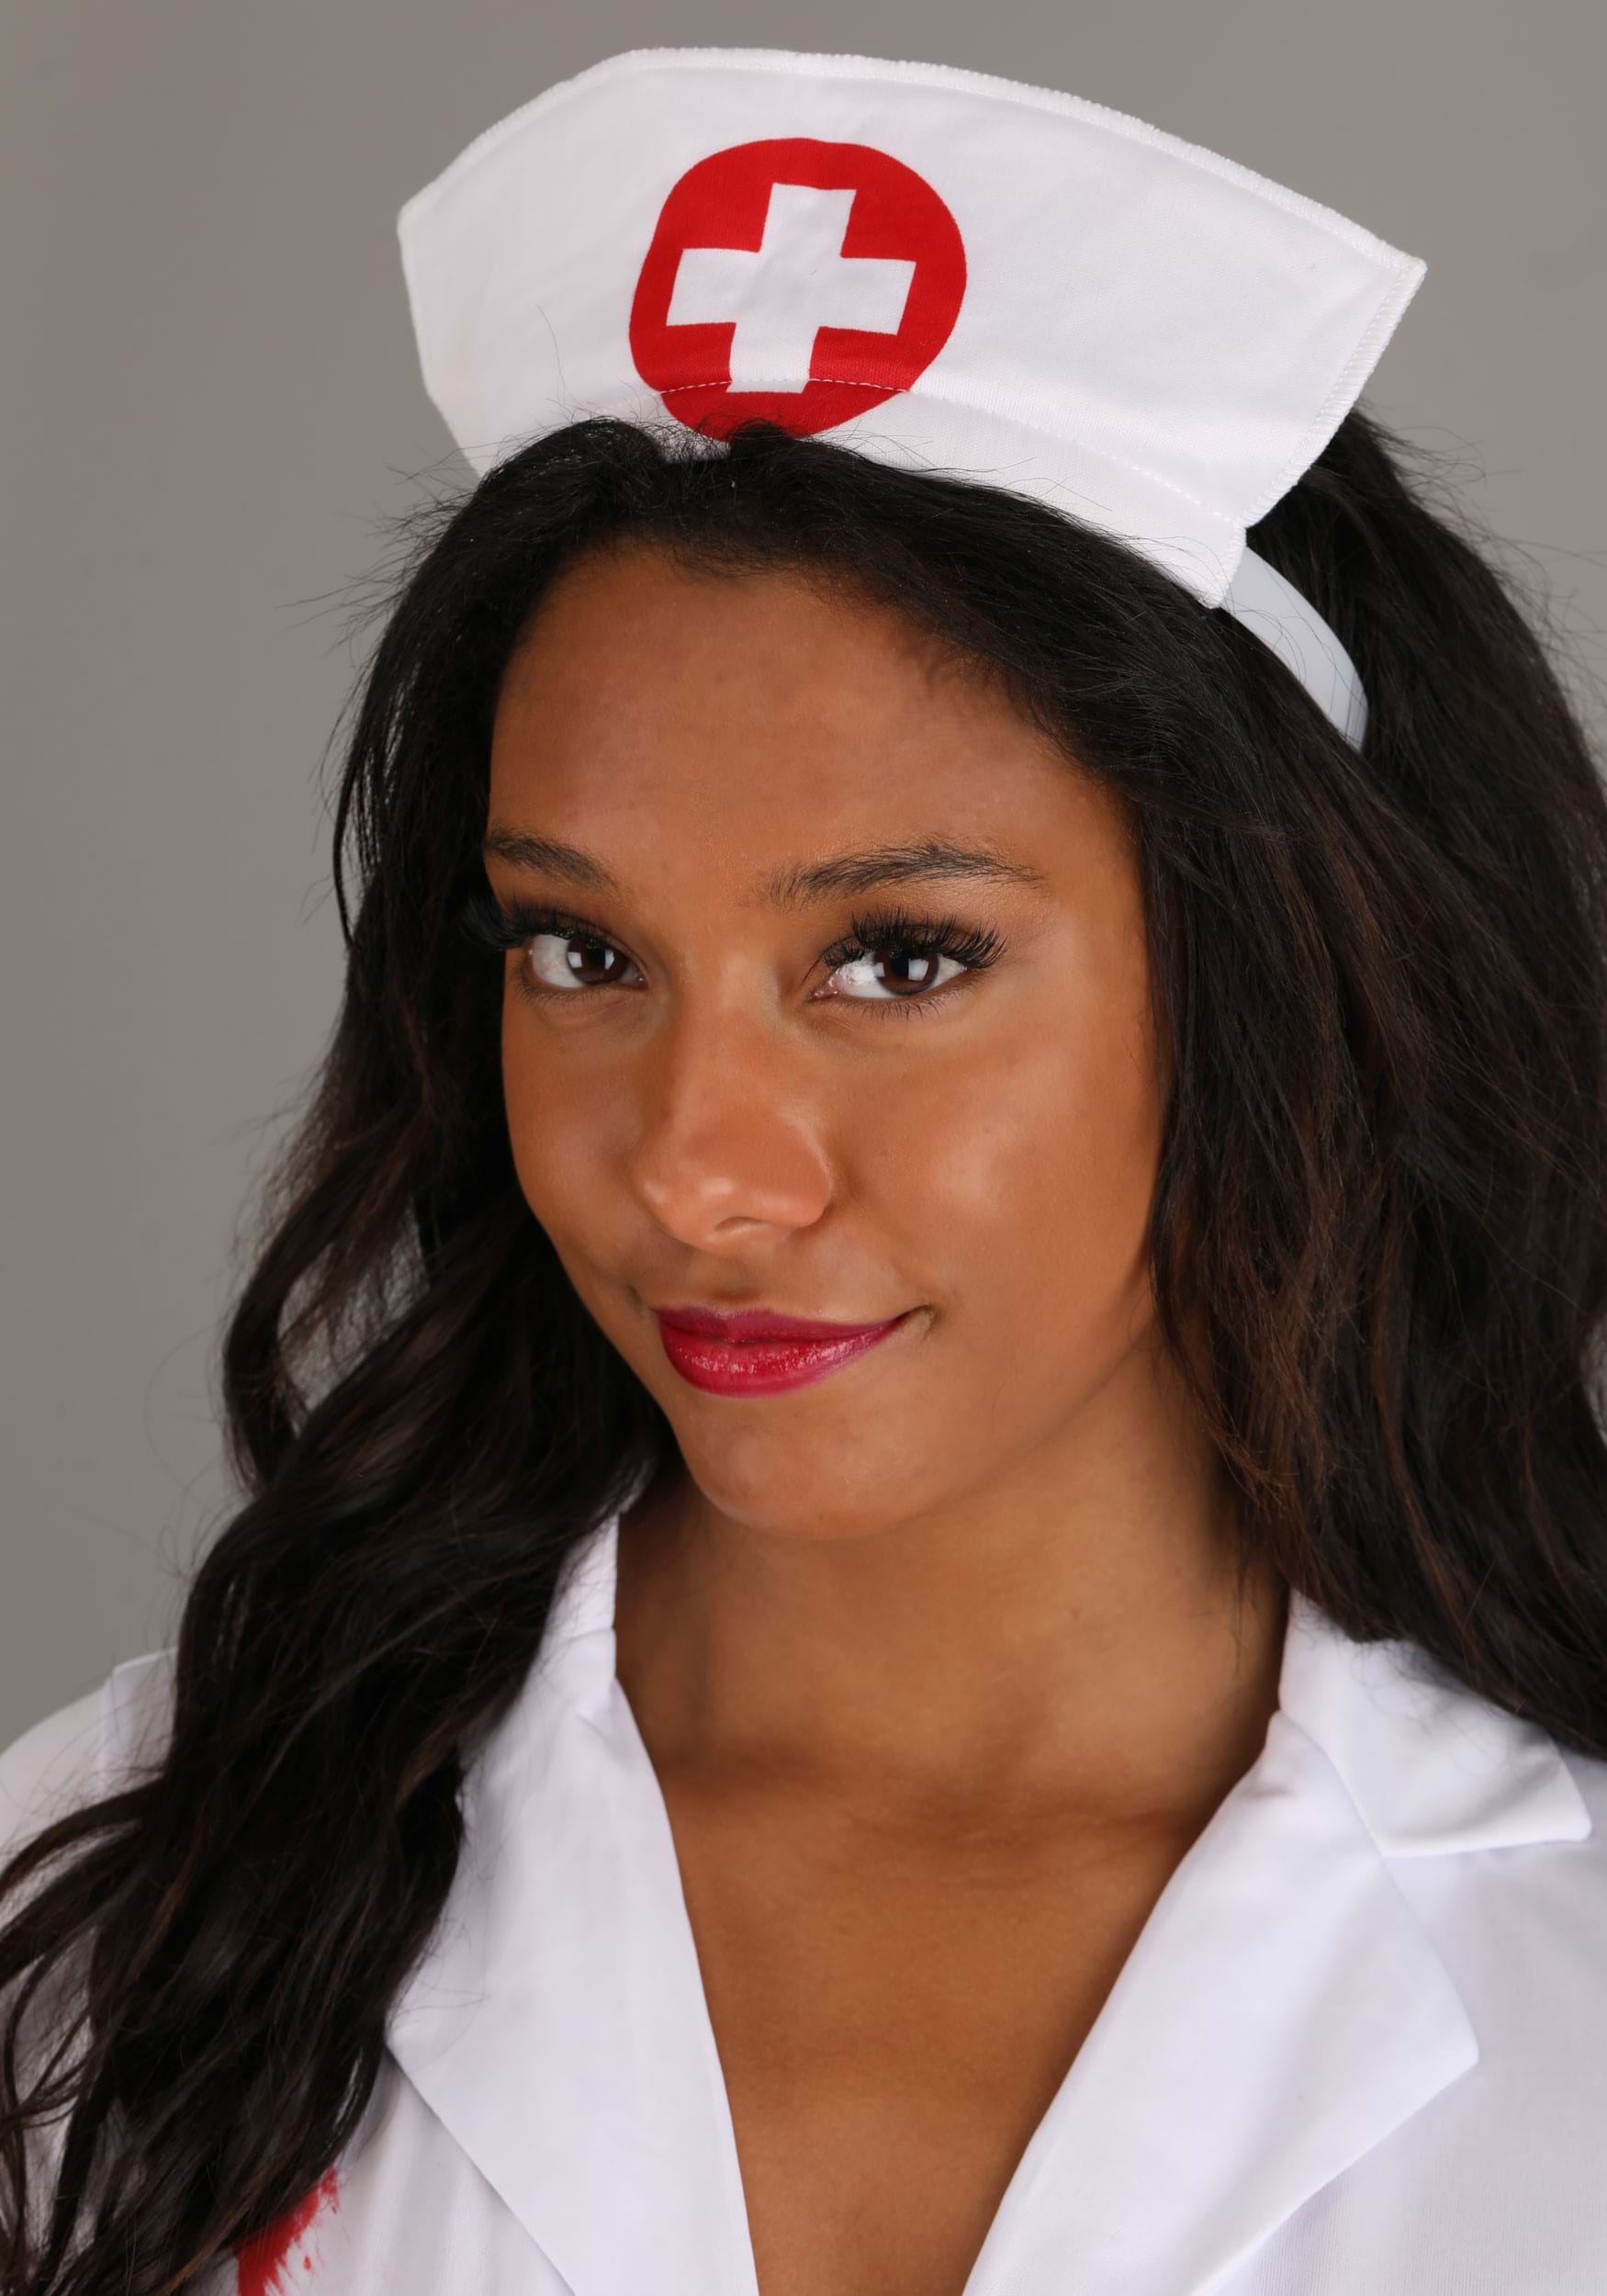 Women's Bloody Killer Nurse Costume | Scary Women's Costumes